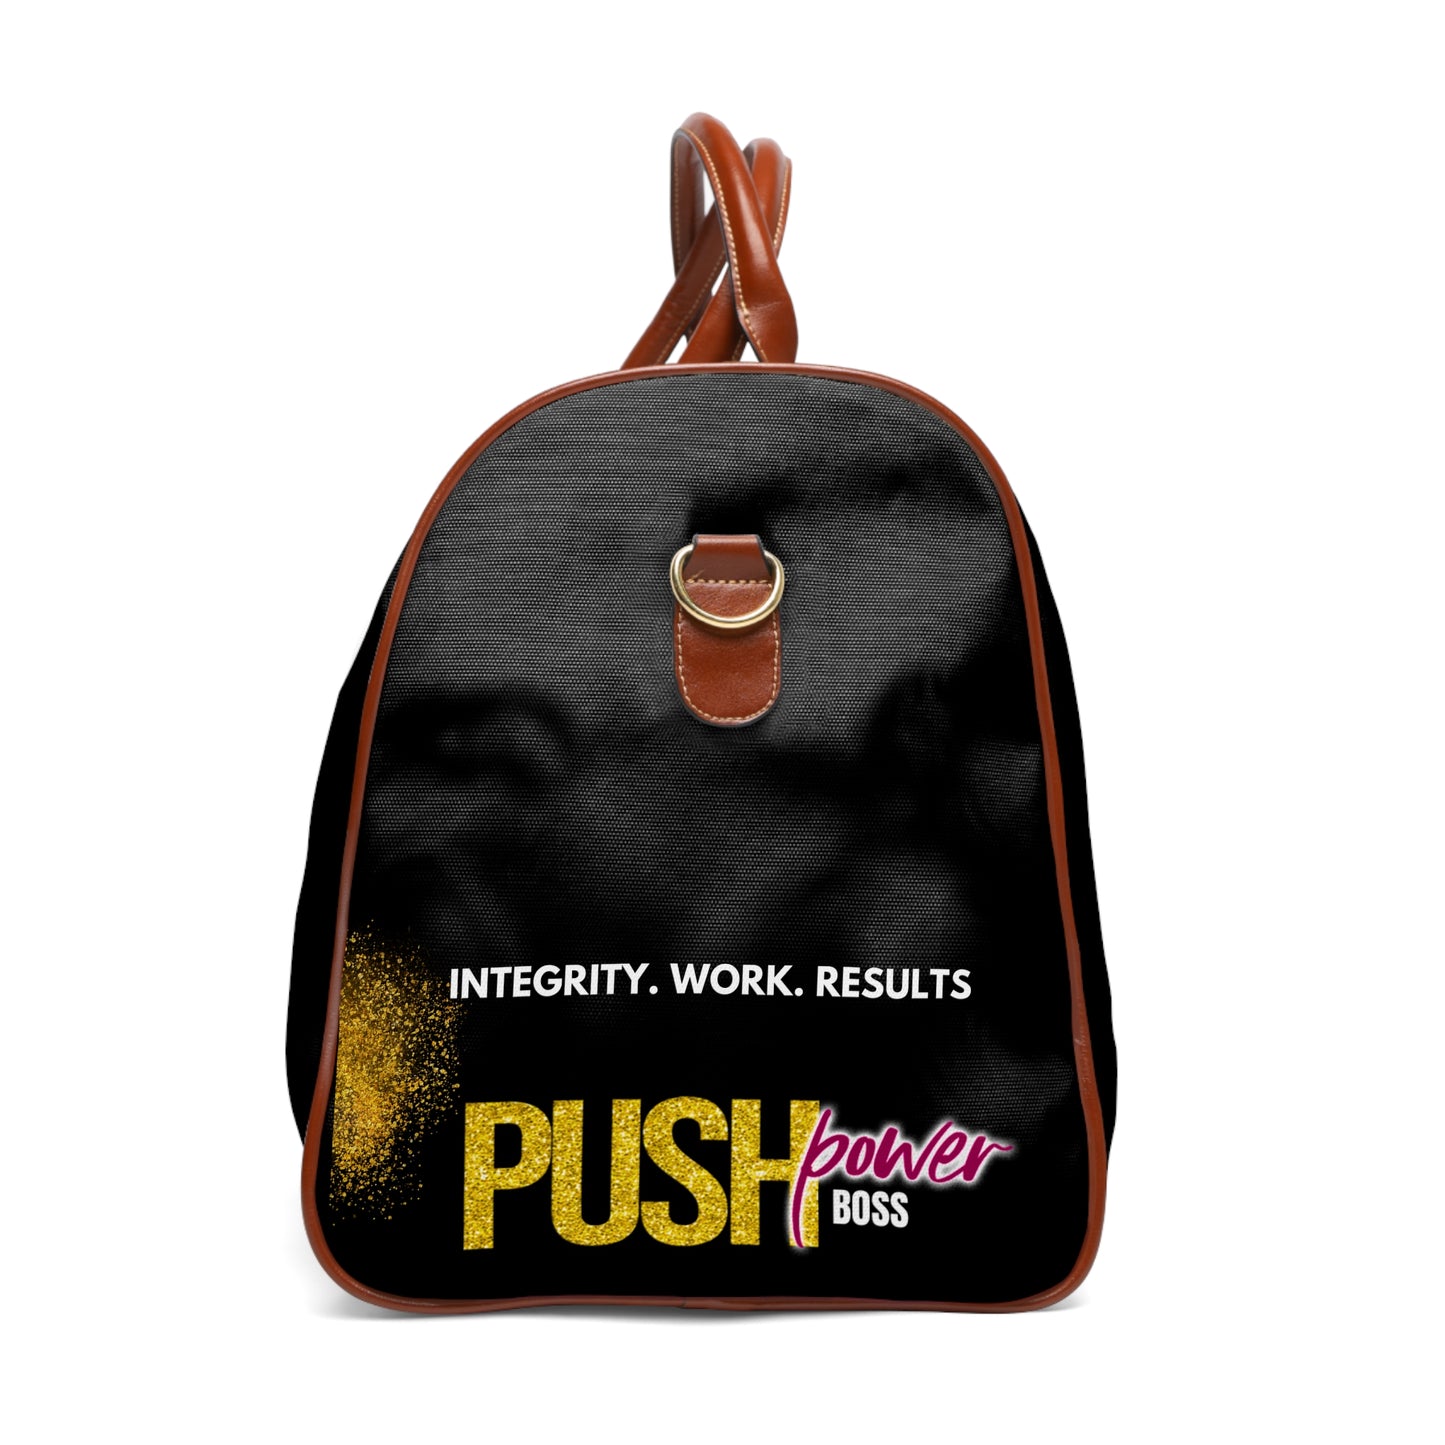 Push Power Boss Waterproof Travel Bag